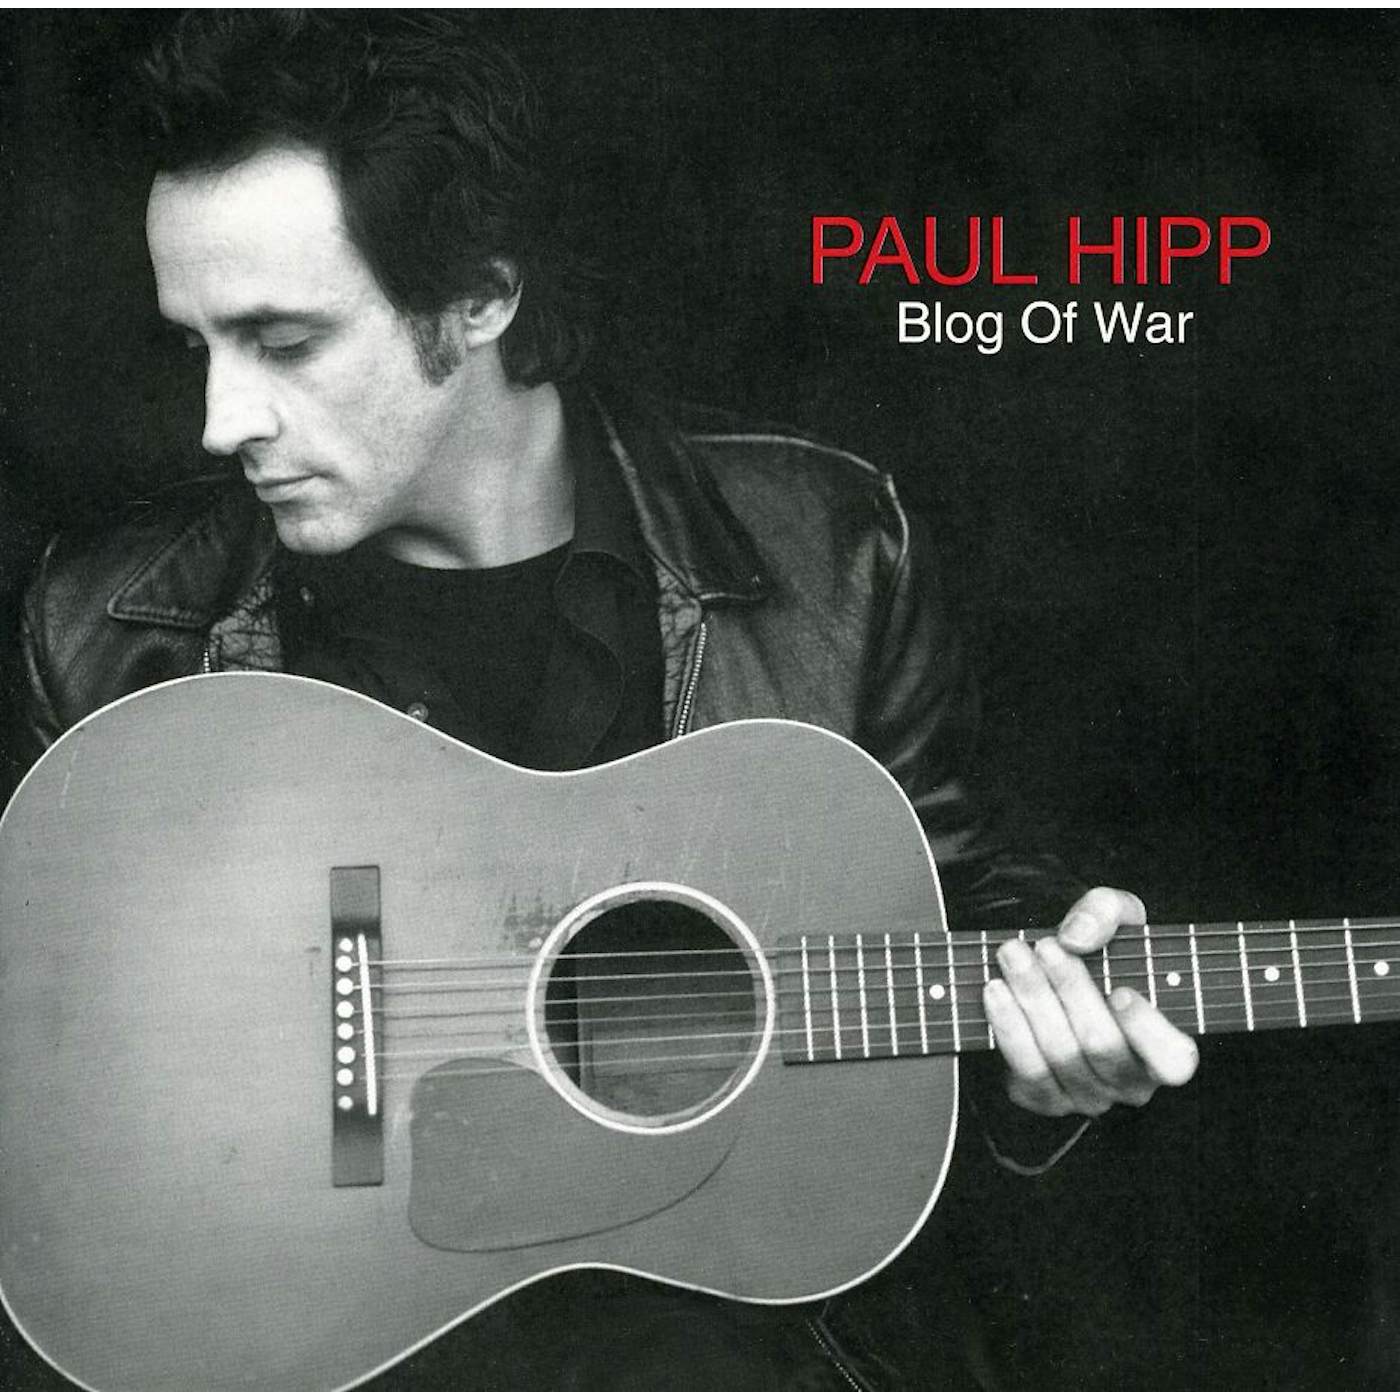 Paul Hipp BLOG OF WAR CD